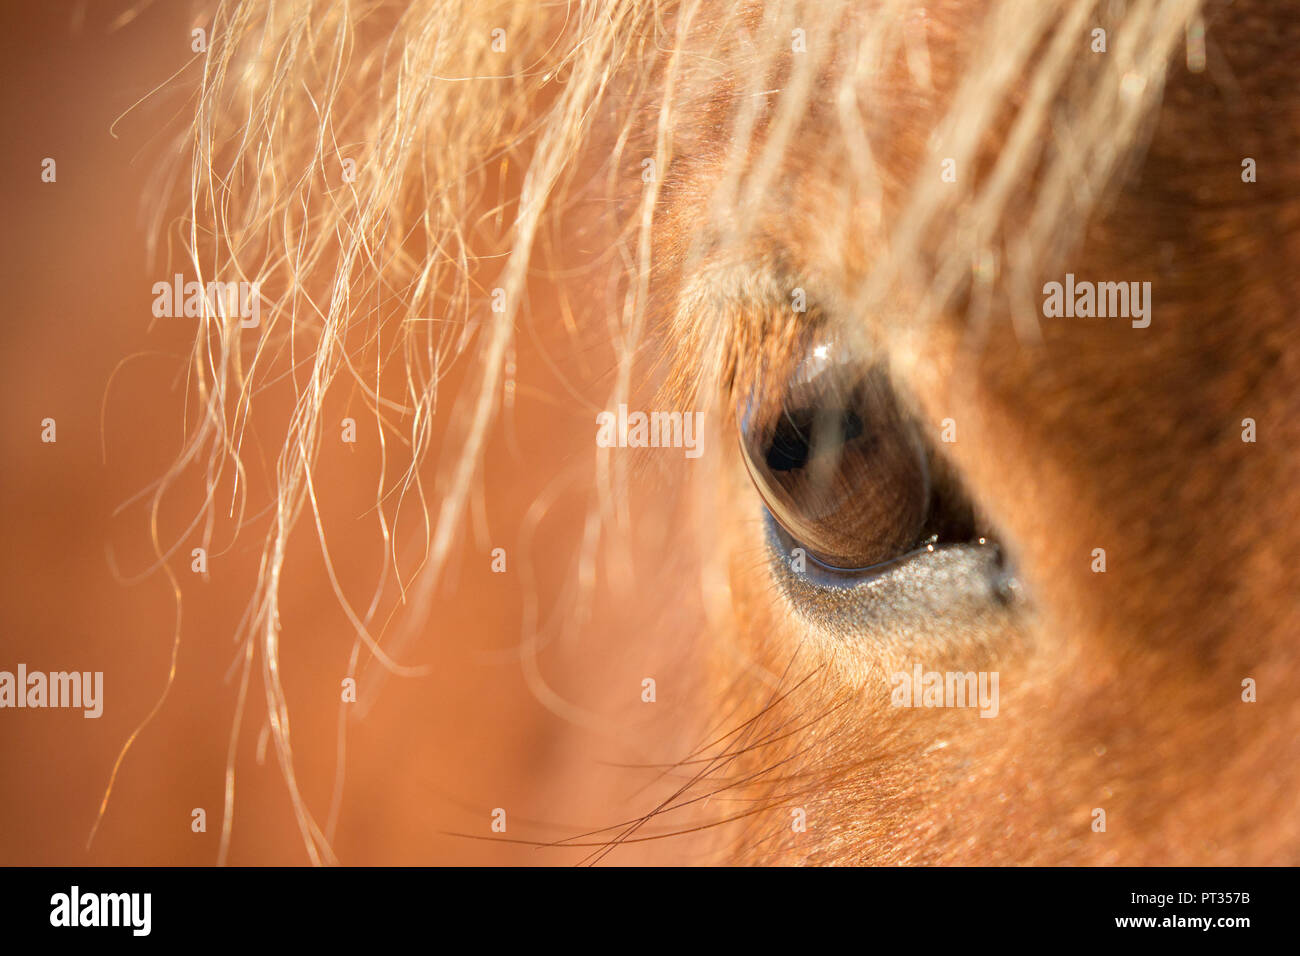 Icelandic horse, eye in close-up Stock Photo